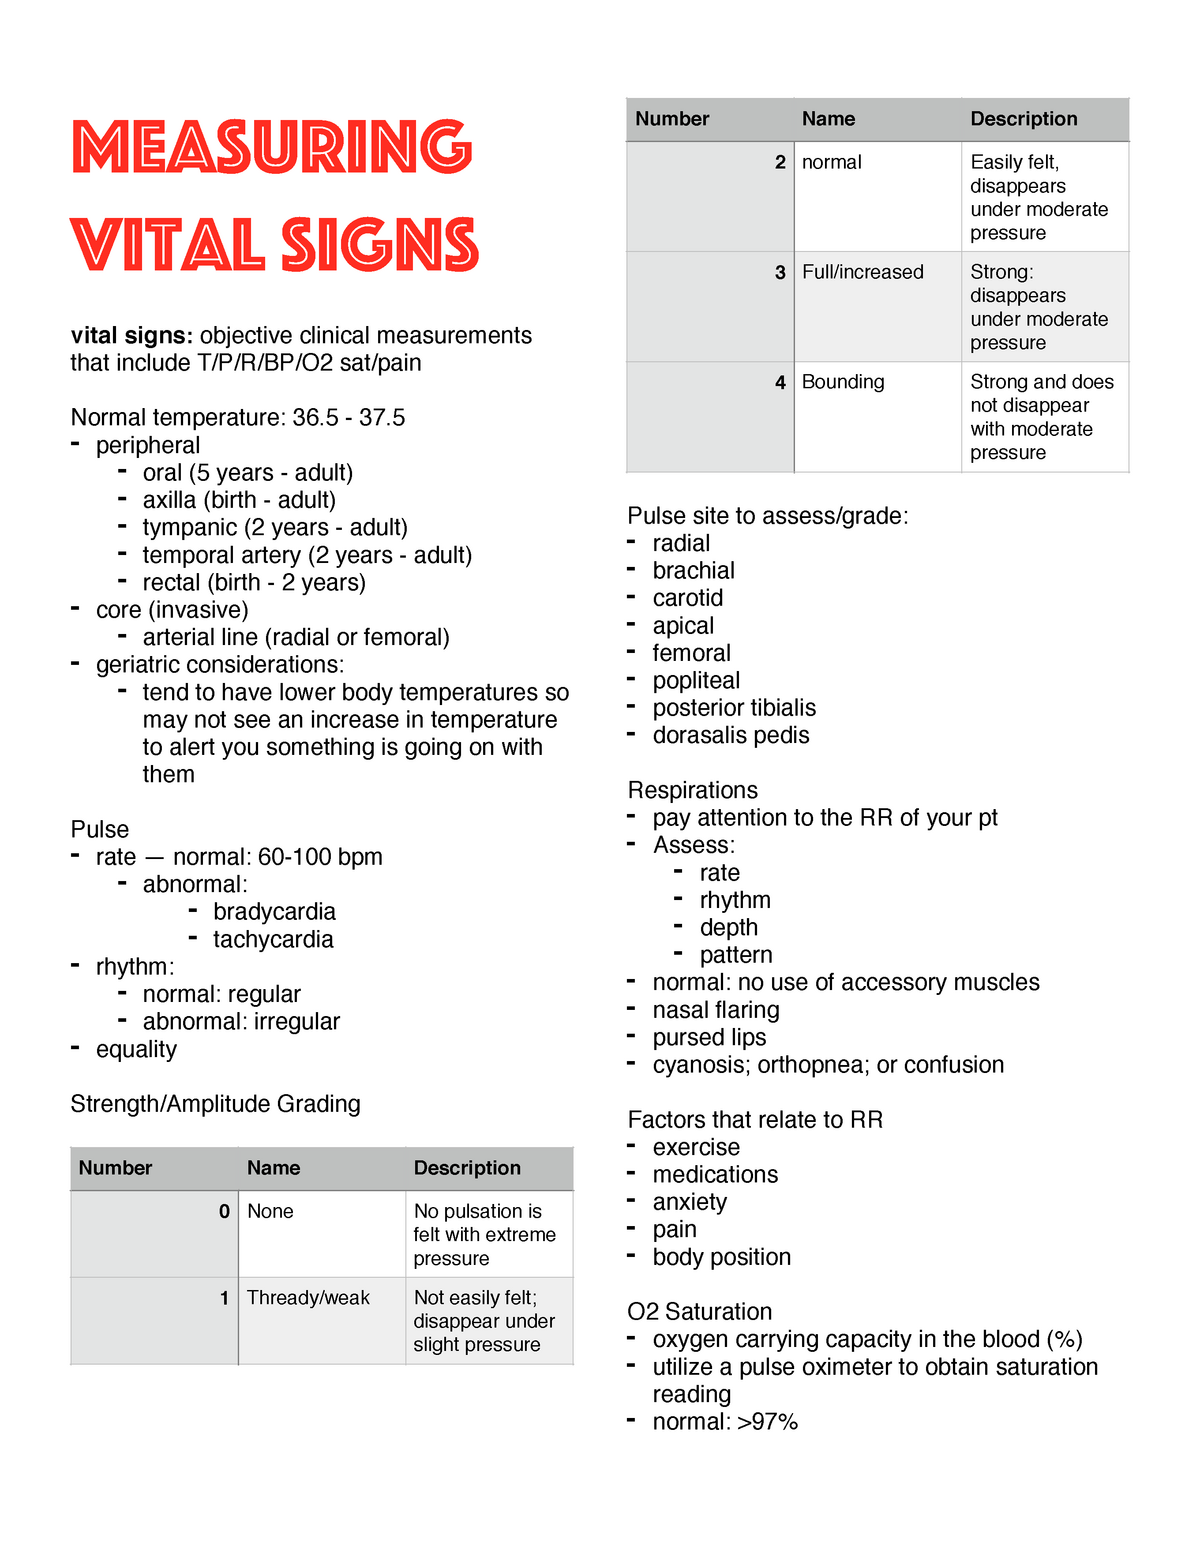 case study on vital signs